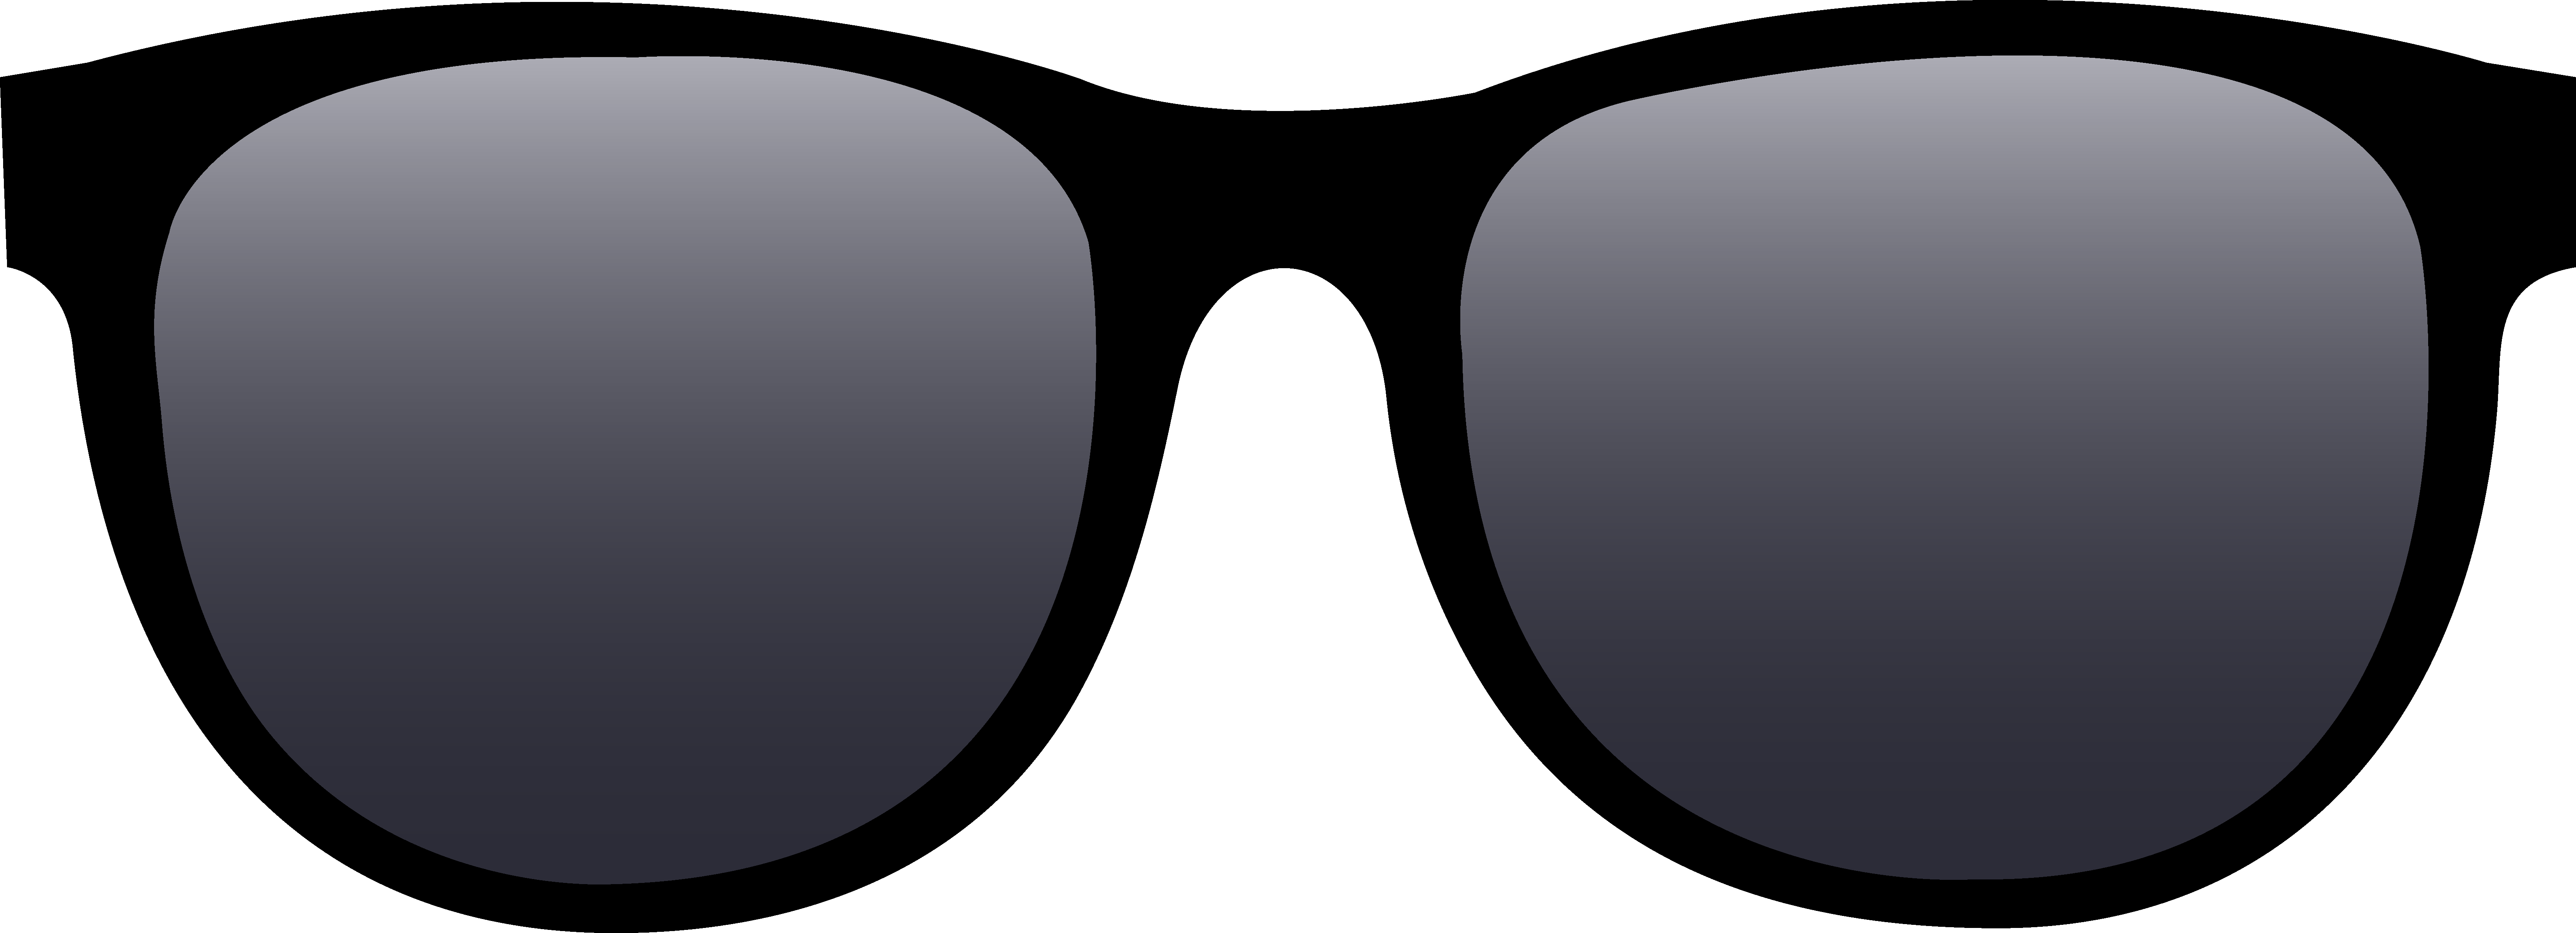 Sunglasses Vector Free - ClipArt Best